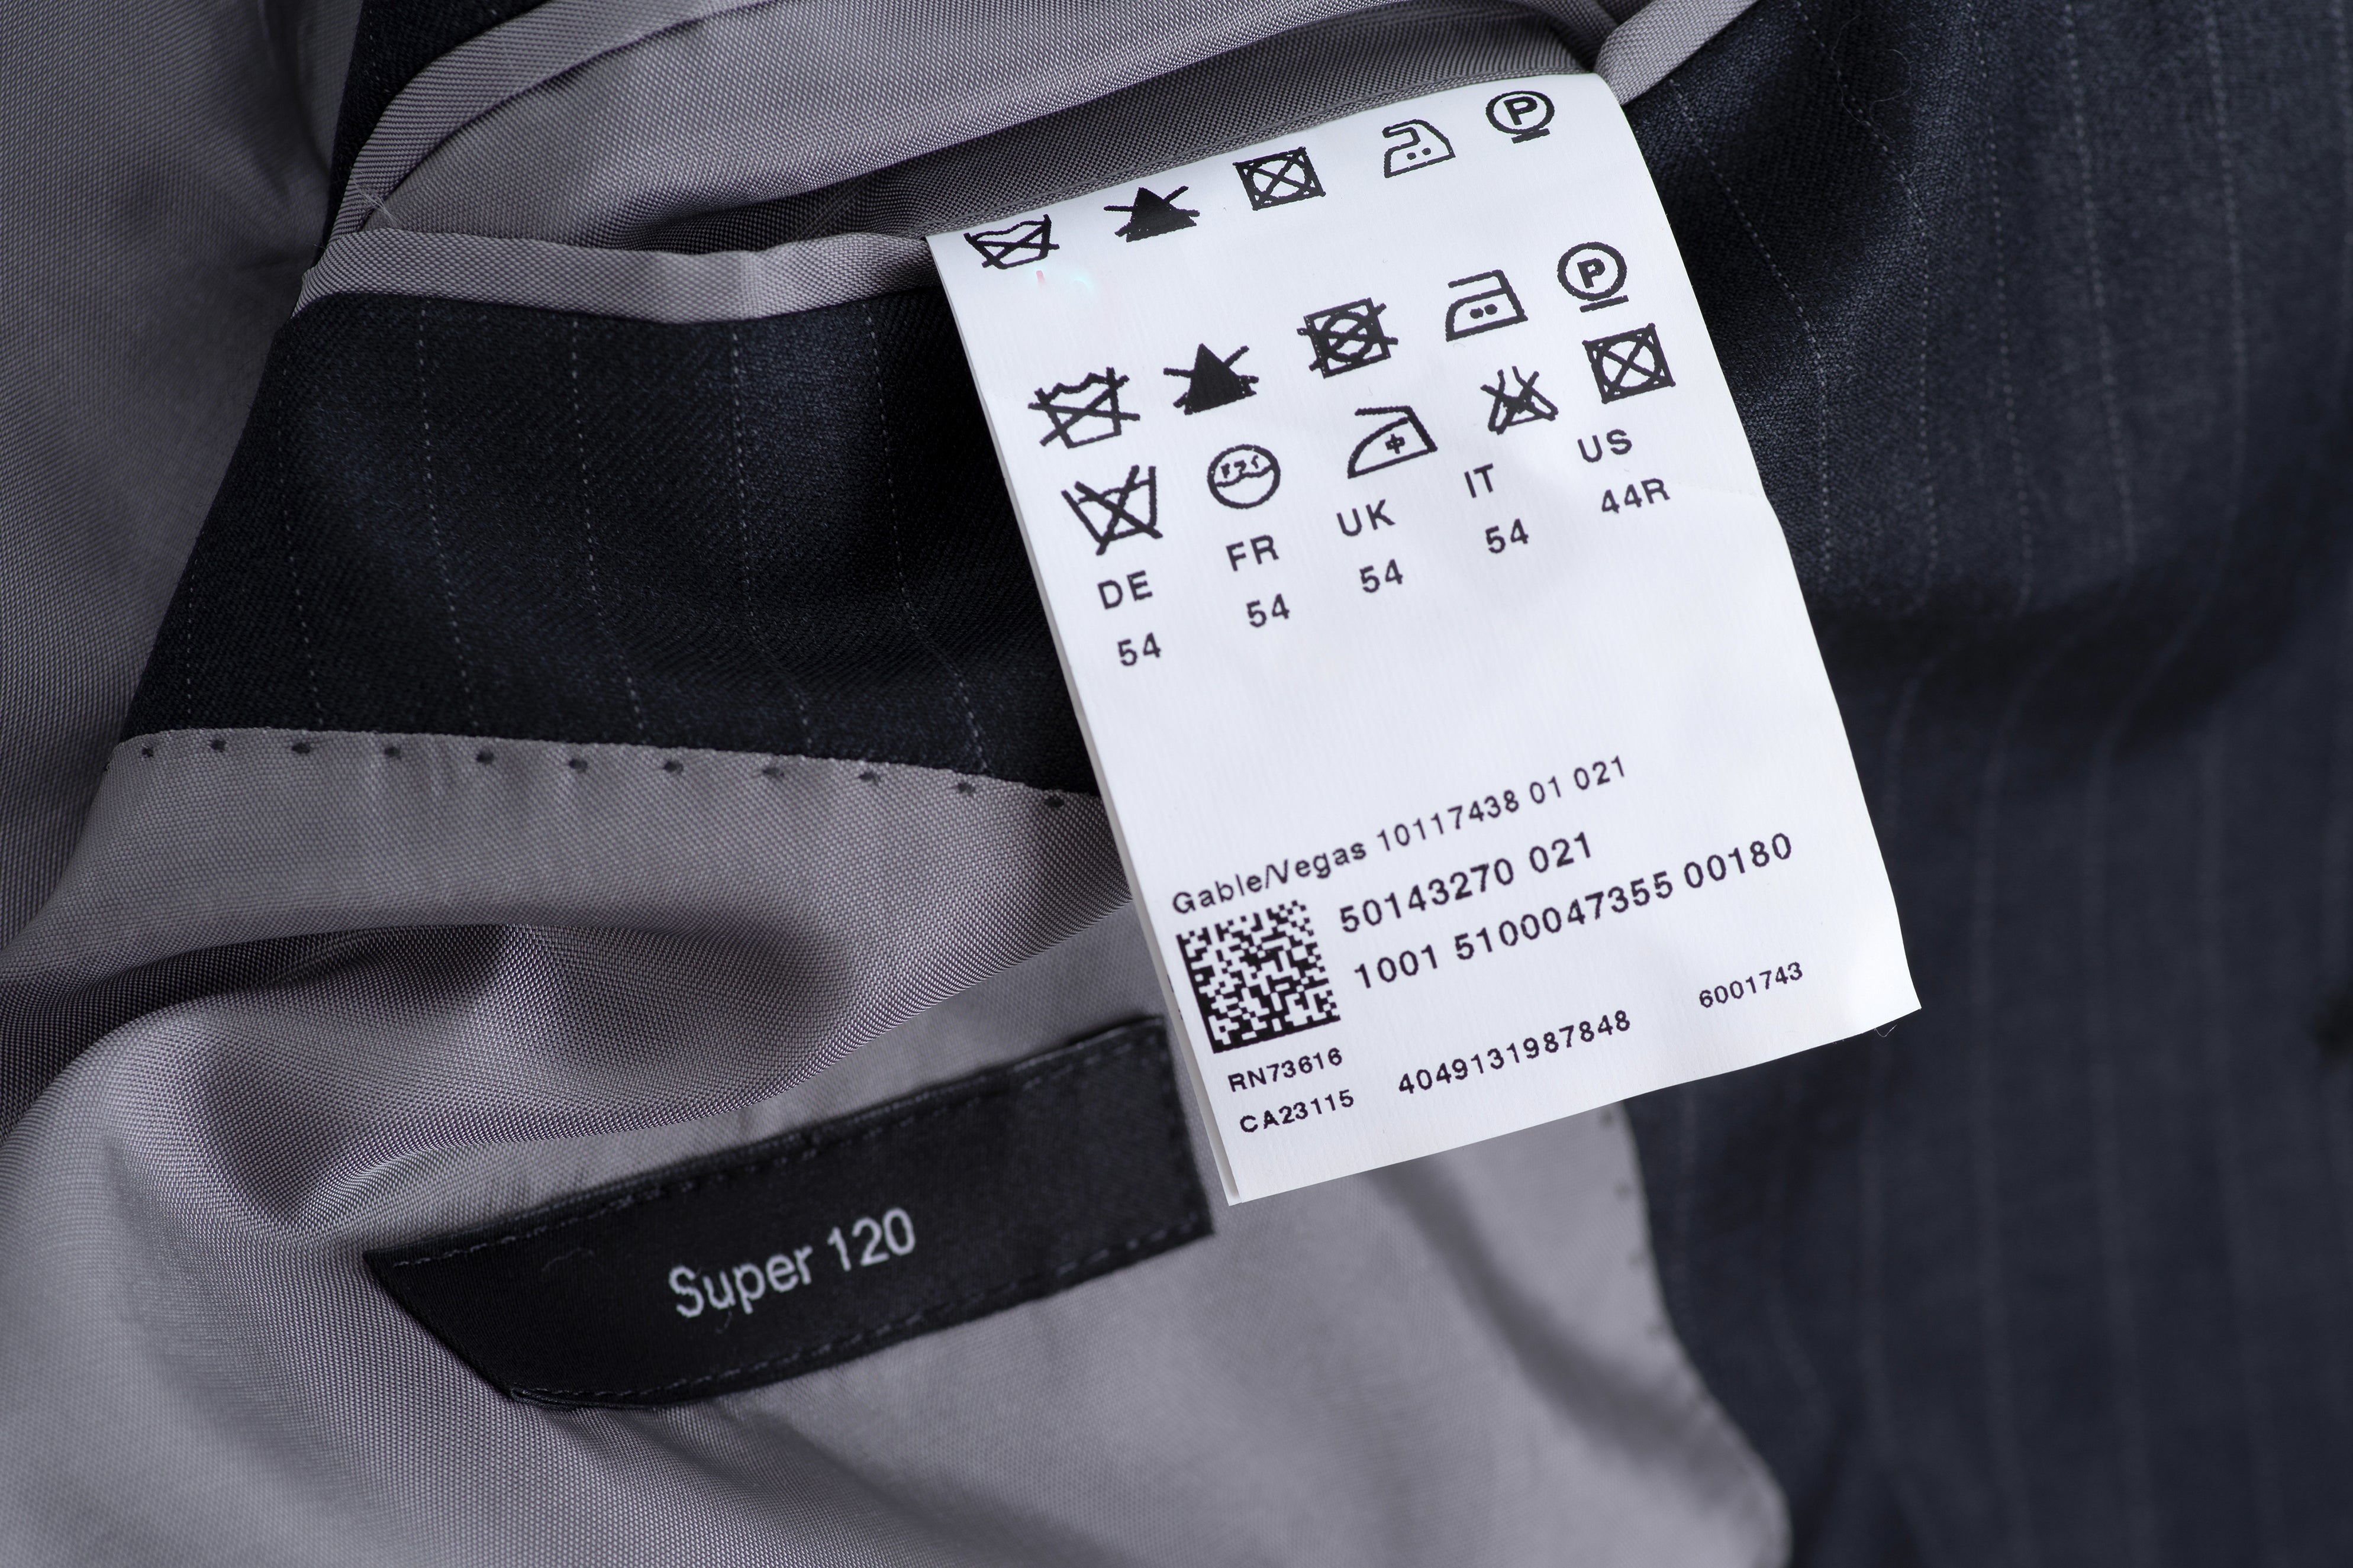 Hugo Boss Super 120's Wool Gray Striped 2 Pieces Suit, US 44R, EU 54